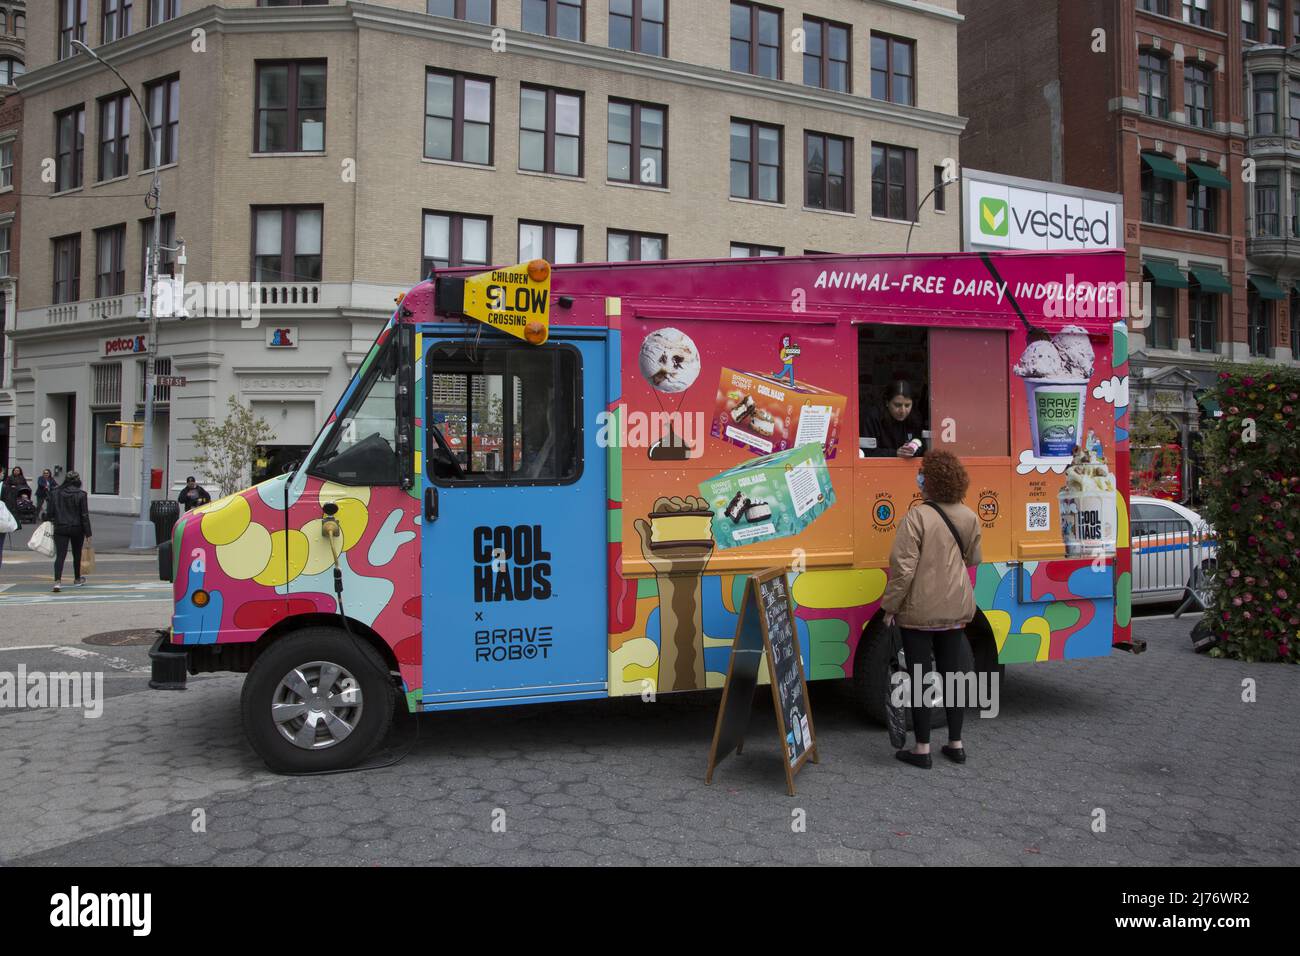 Colorful vegan ice cream truck at Union Square in New York City. Stock Photo